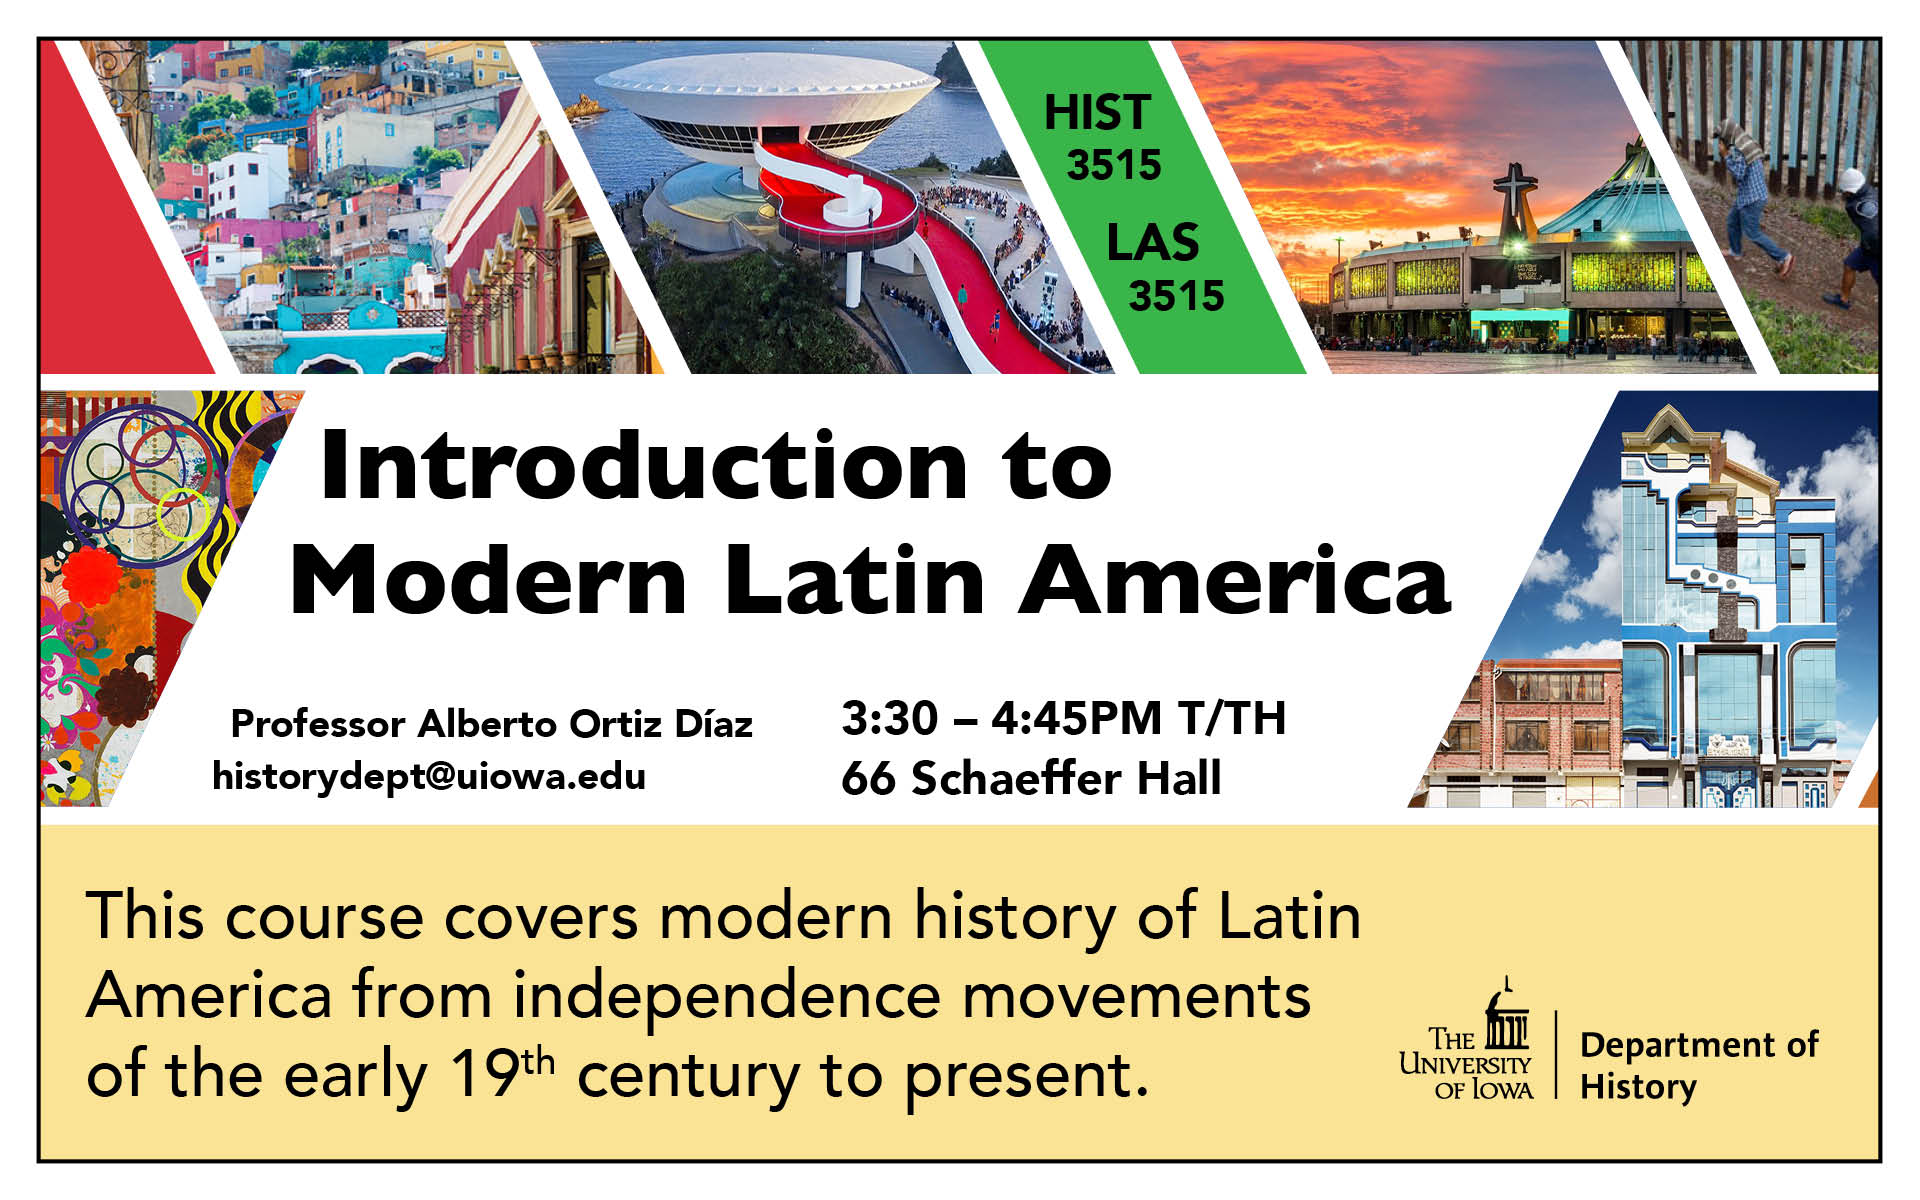 HIST:3515 Intro to Modern Latin America, 3:30 - 4:45pm TTH in 66 Schaeffer Hall. Professor Alberto Ortiz Diaz. historydept@uiowa.edu